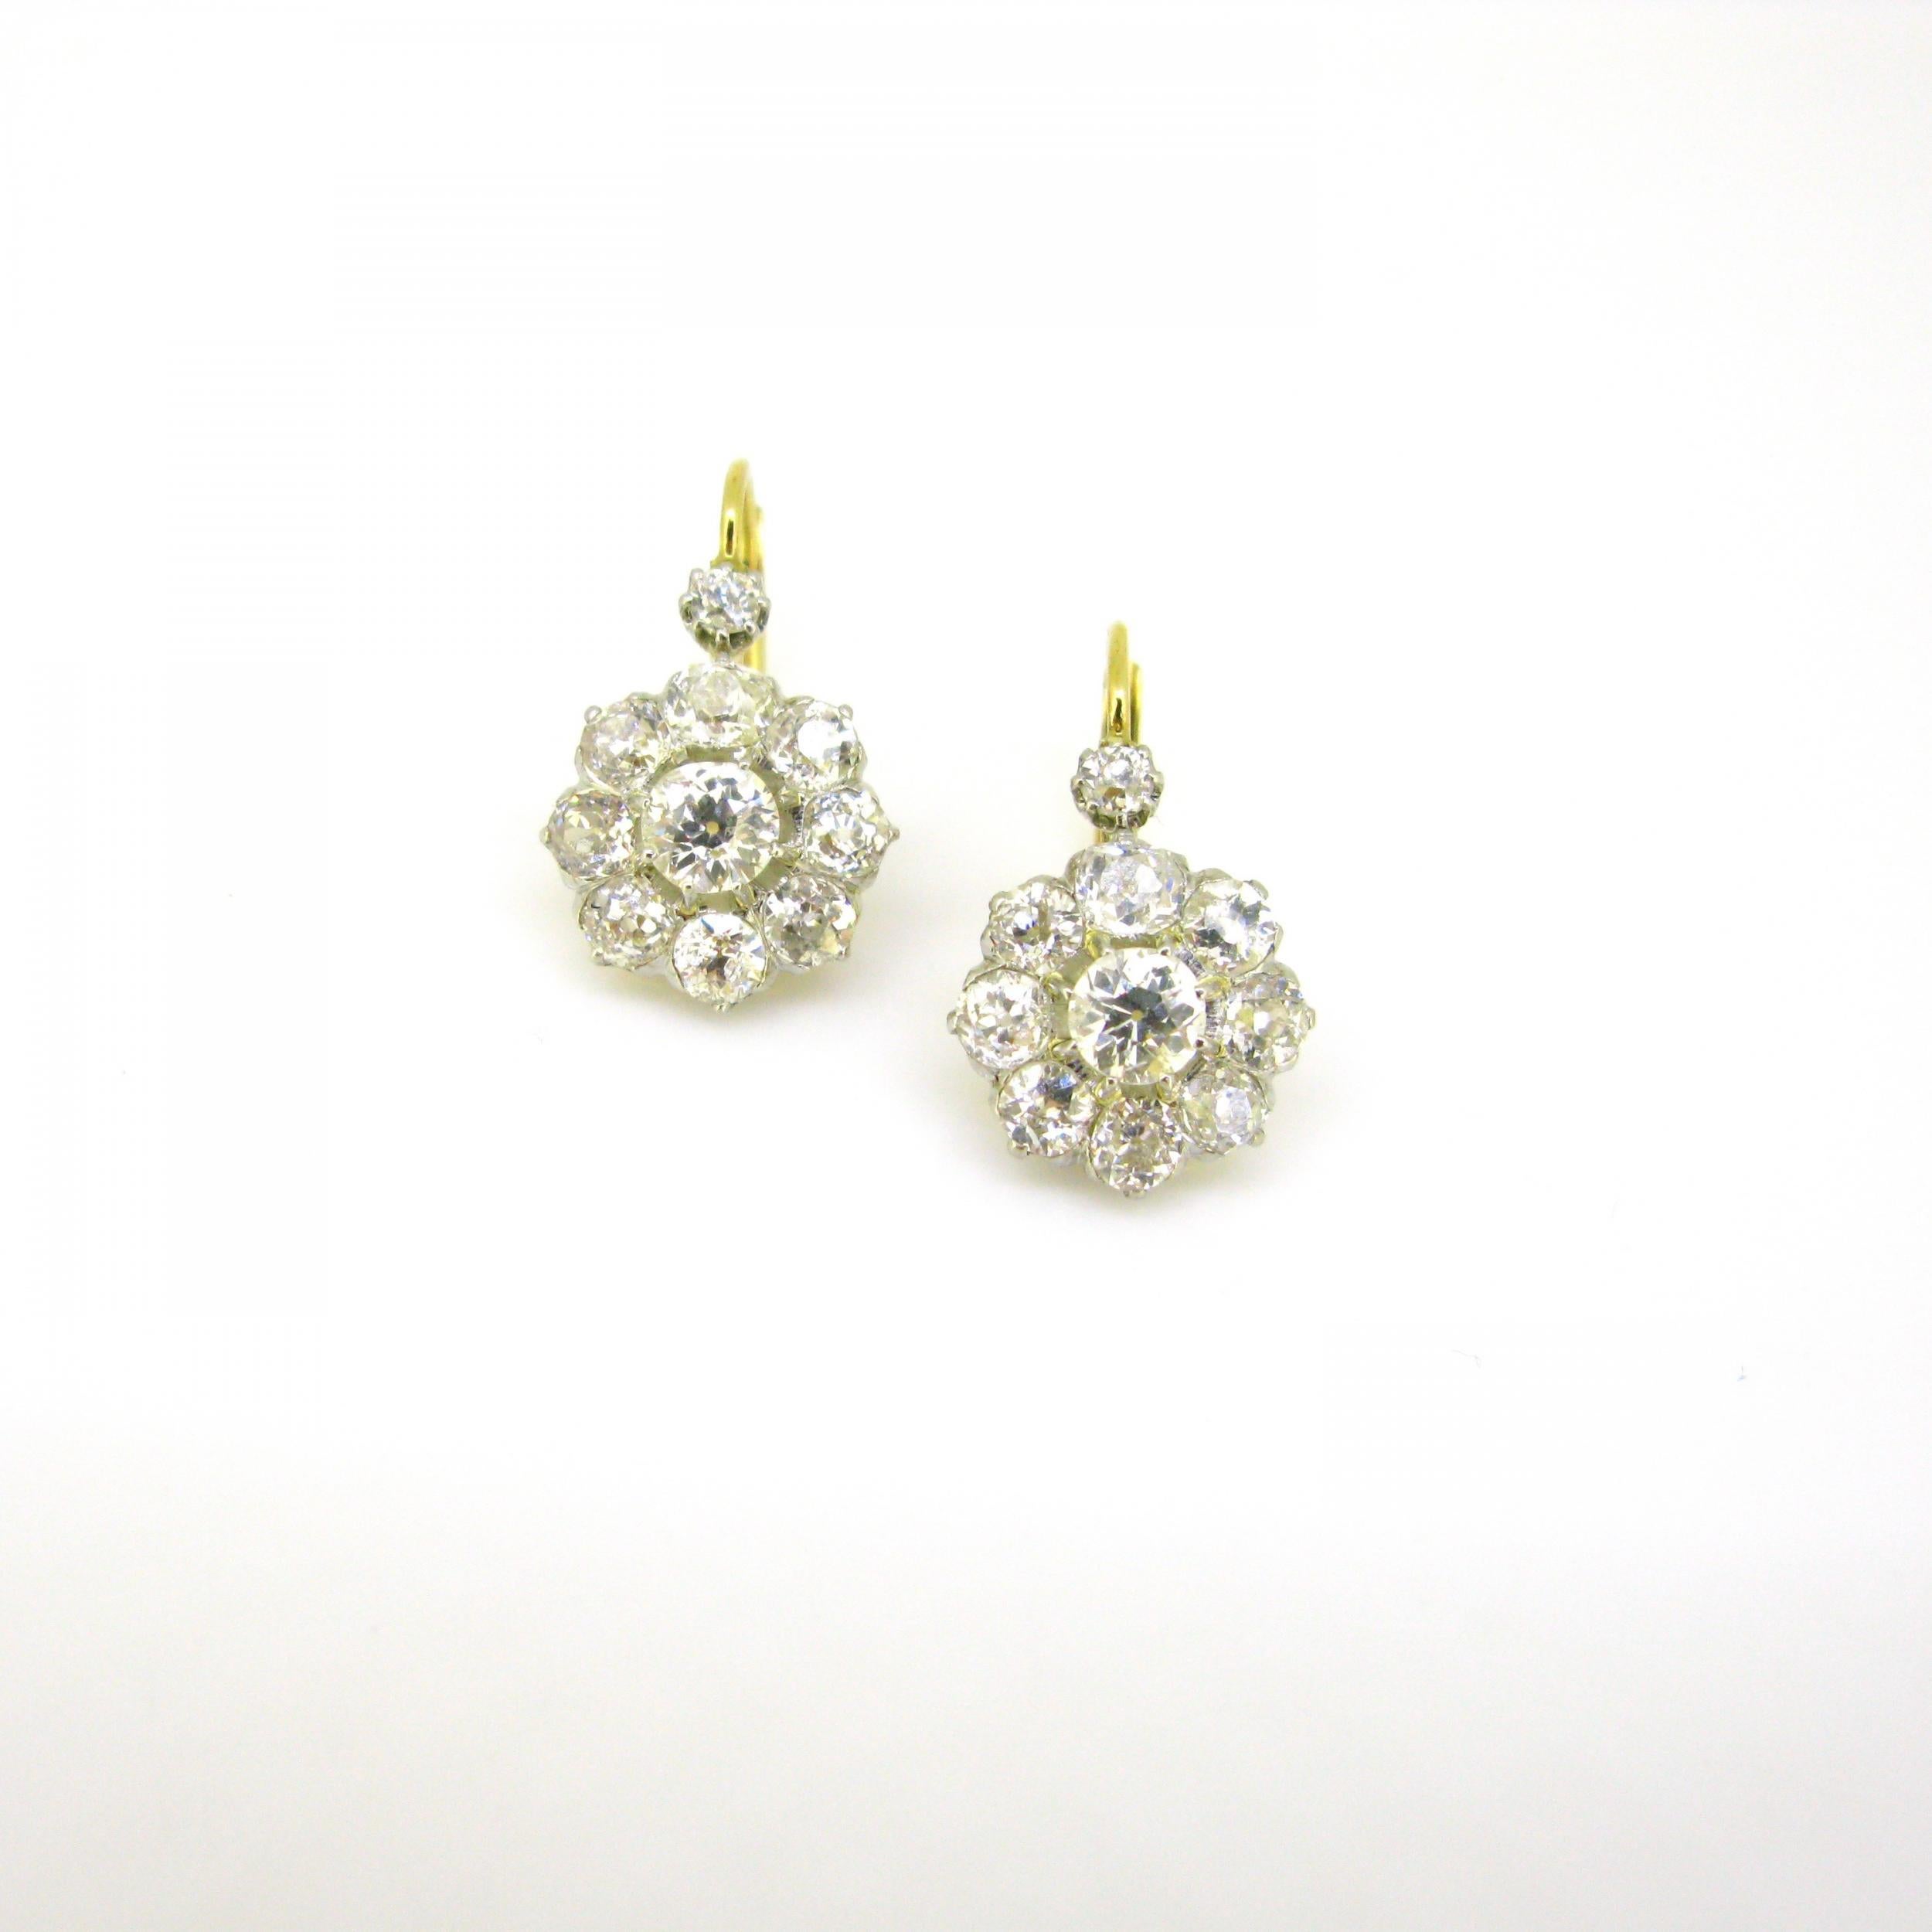 Women's or Men's Antique Belle Époque Diamonds Dormeuses Earrings in Box, 18kt Gold and Platinum